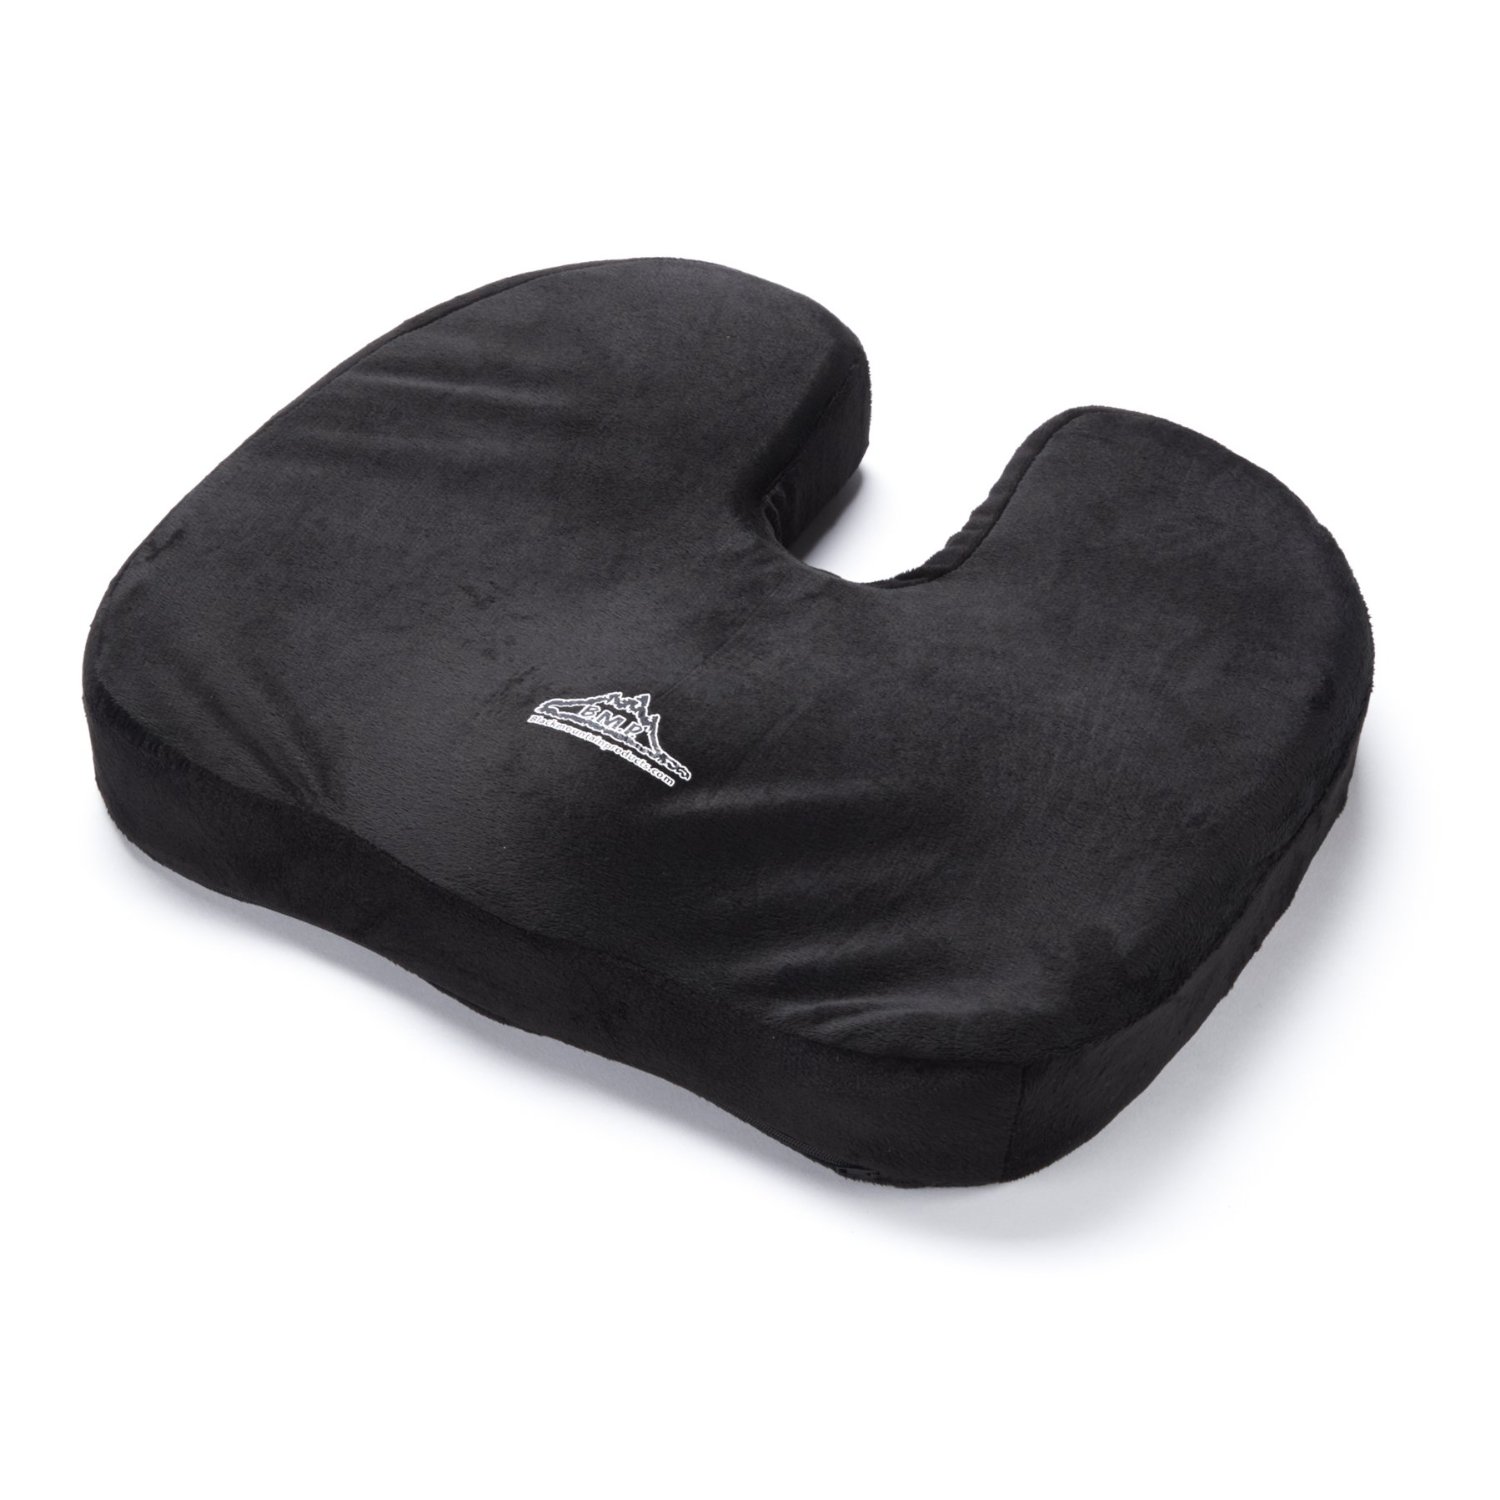 Black Mountain Products Orthopedic Comfort and Stadium Seat Cushion